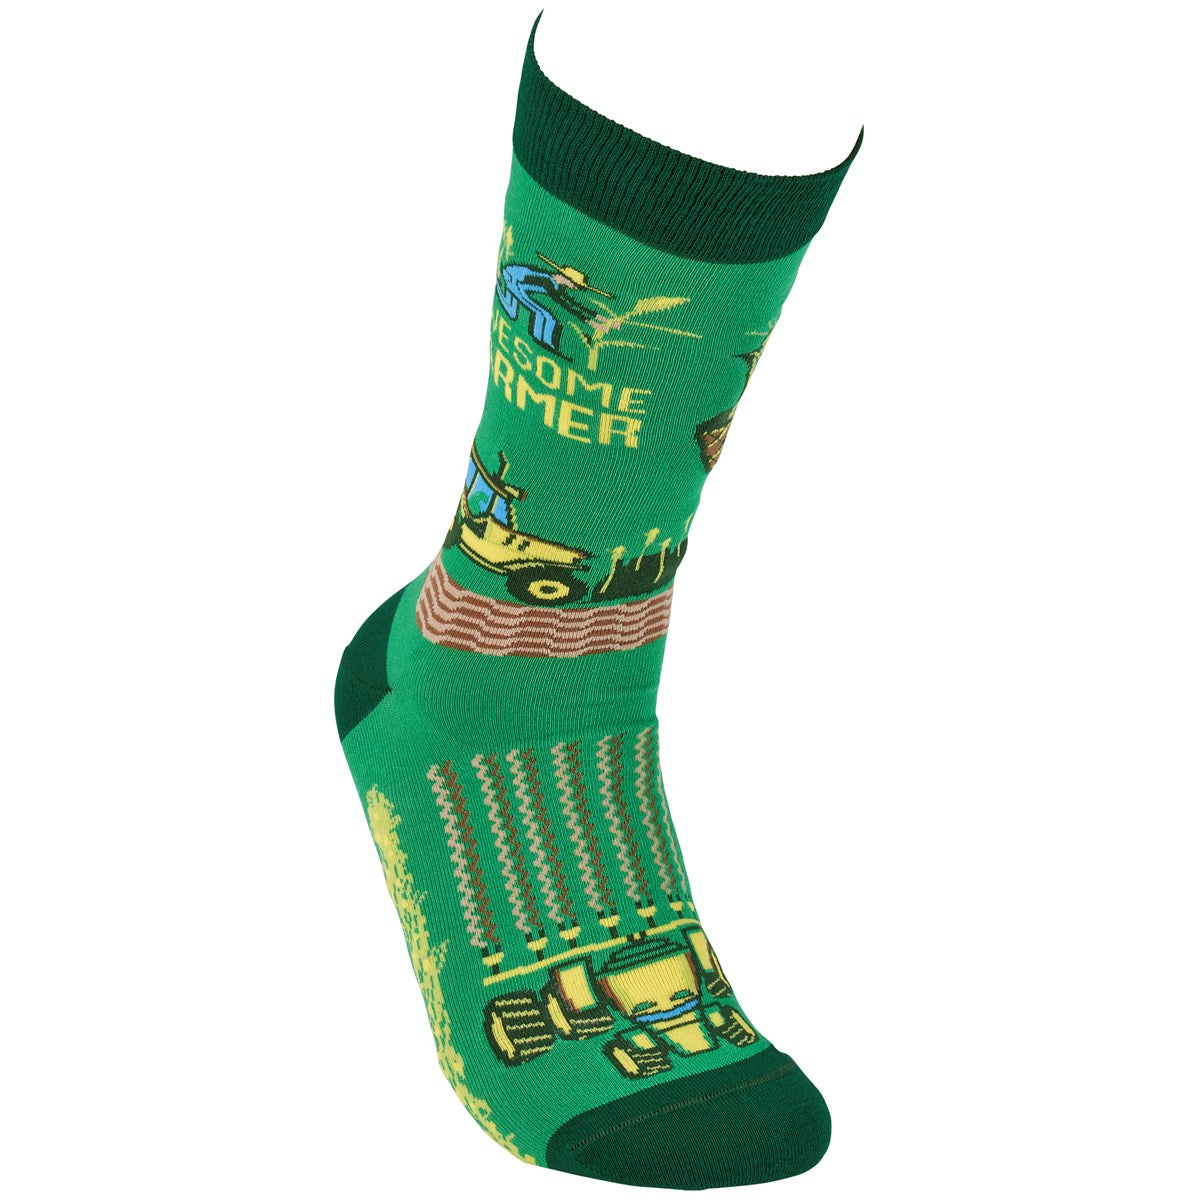 Awesome Farmer Fun Novelty Socks